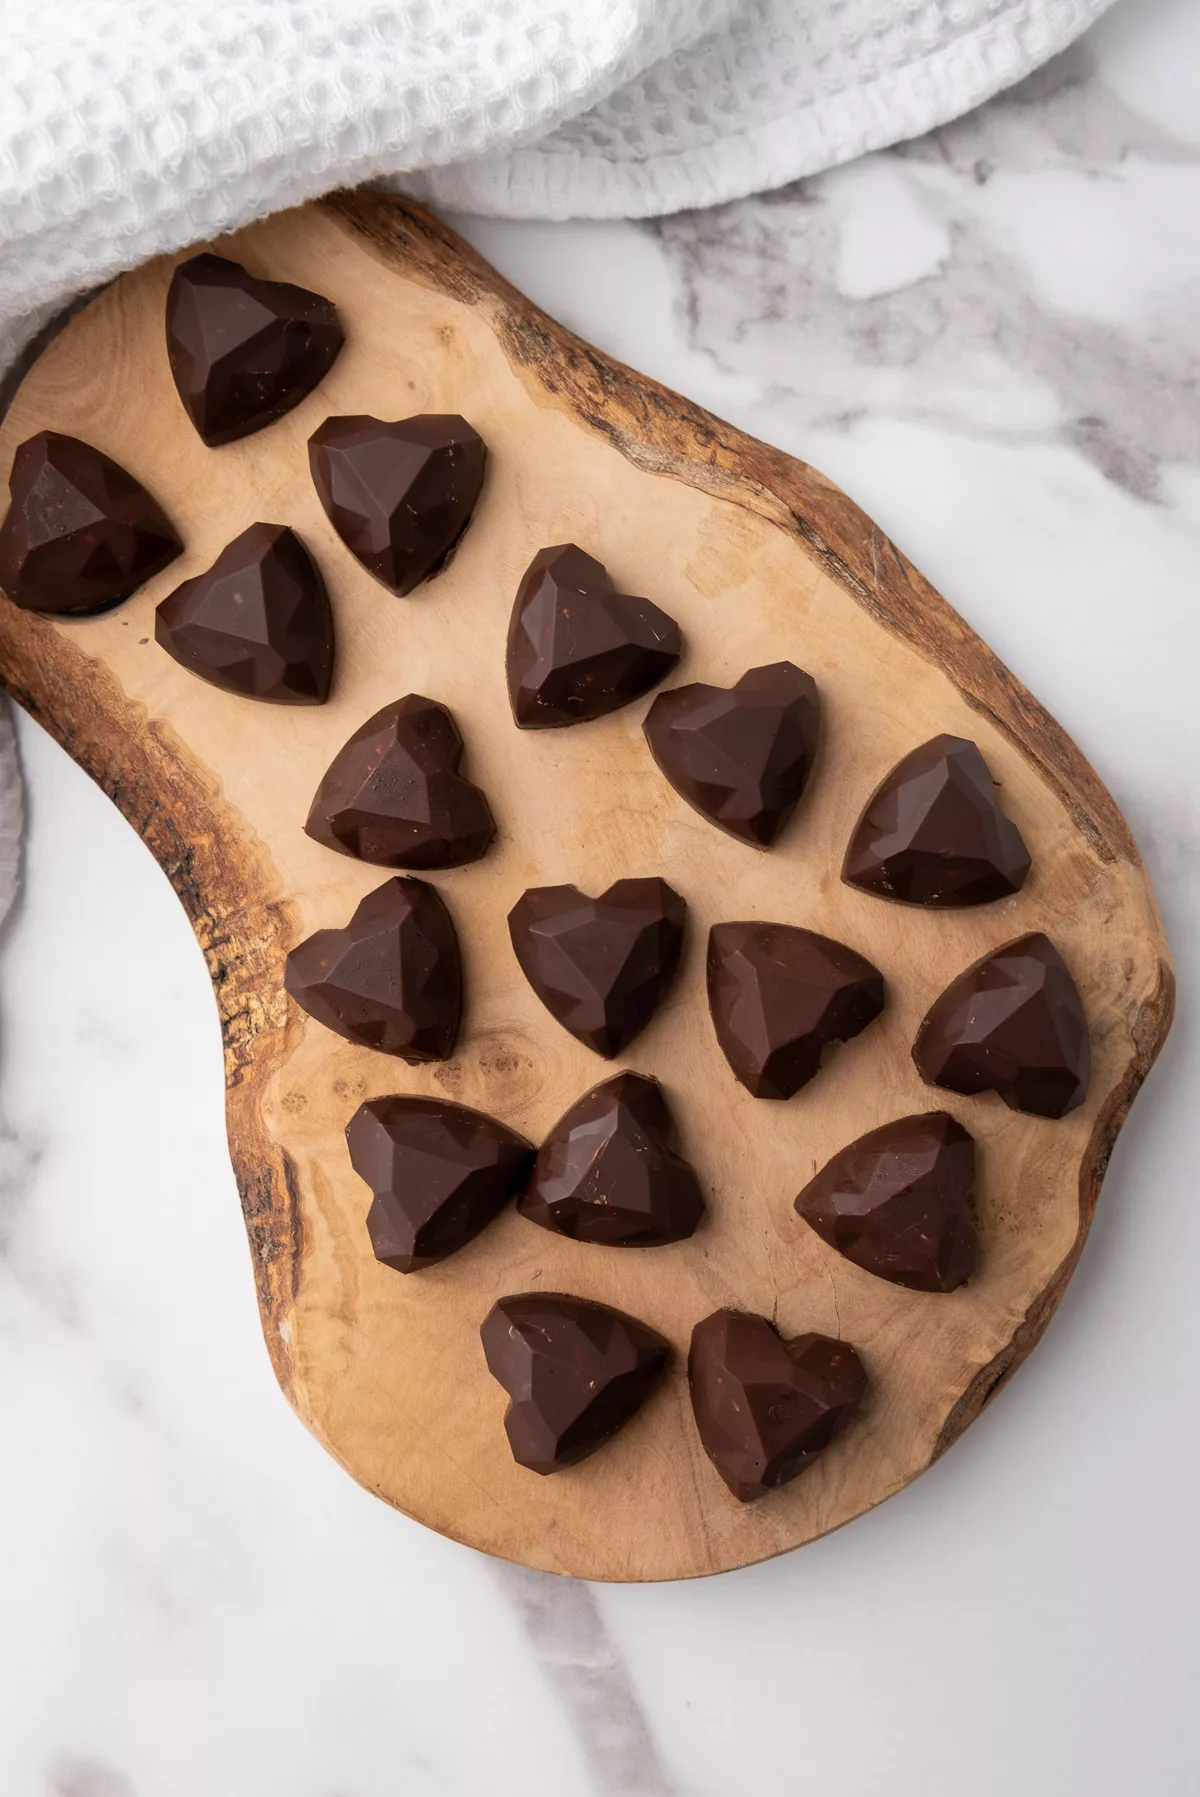 Overhread shot of heart-shaped Nutella bites on wooden board